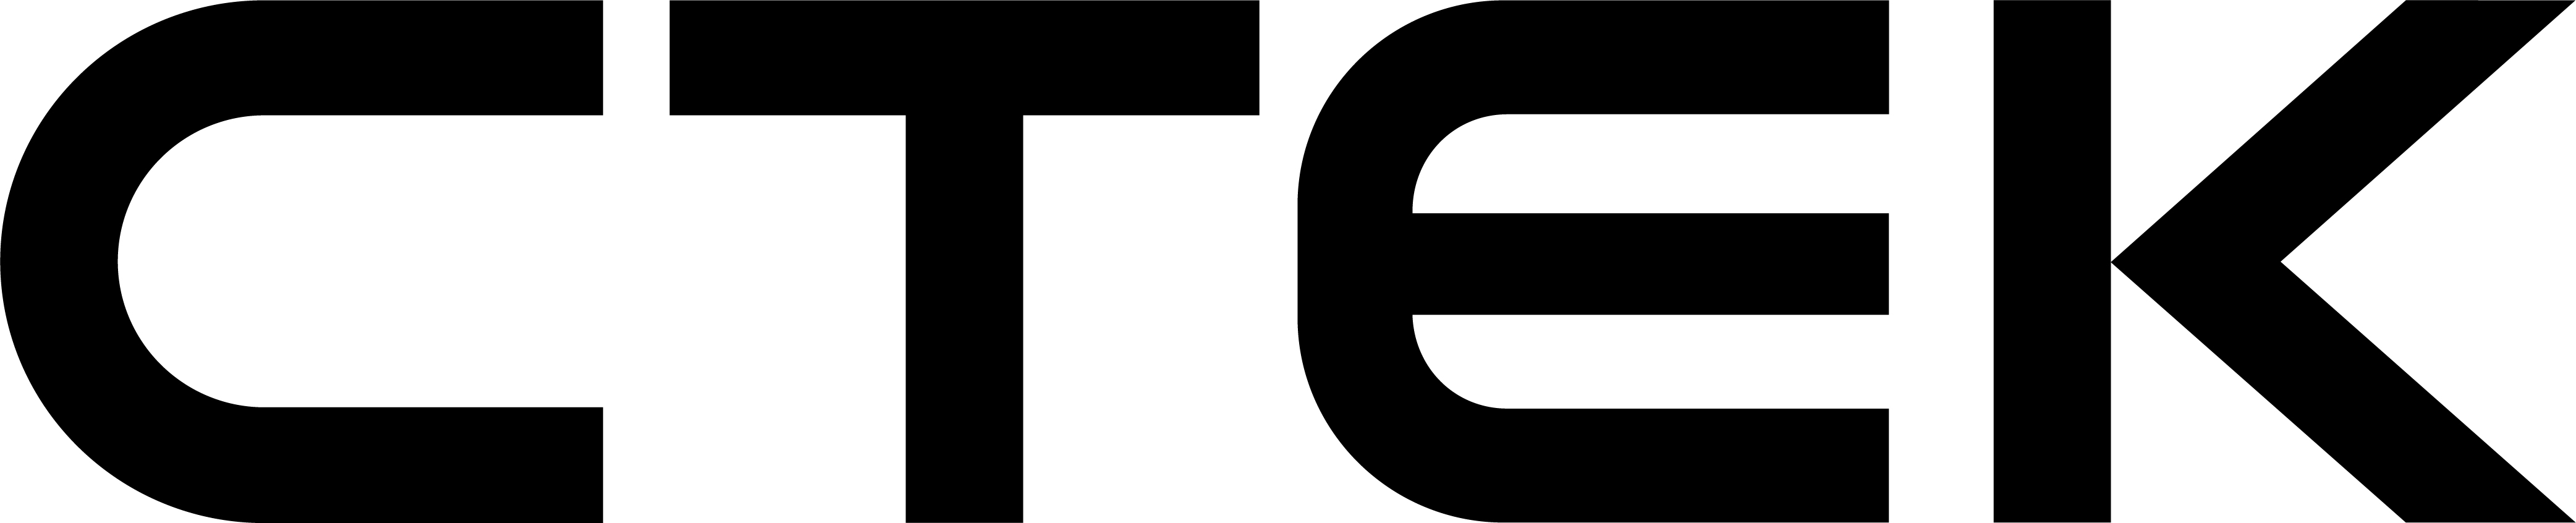 Software & Firmware | ctek.com